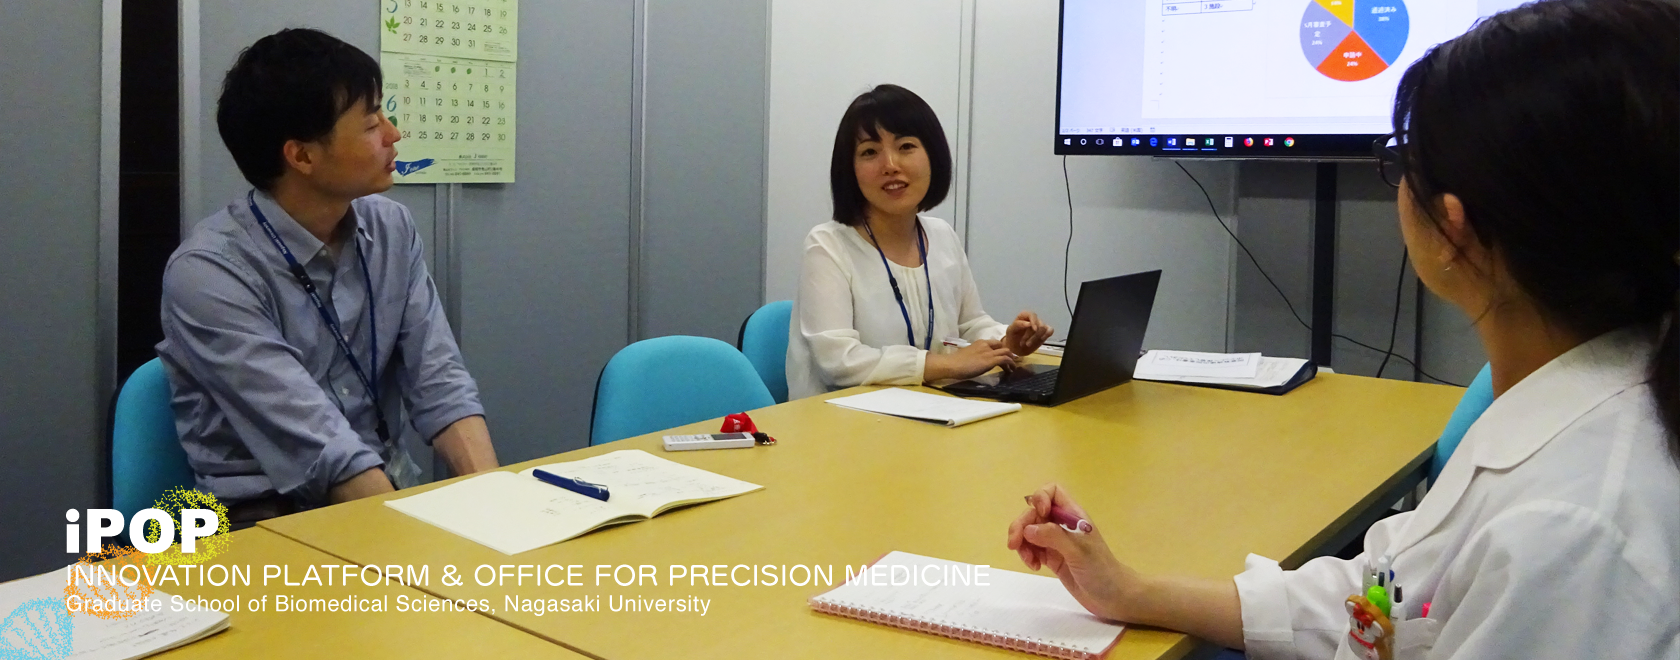 INNOVATION PLATFORM & OFFICE PRECISION MEDICINE(iPOP), Graduate School of Biomedical Sciences, Nagasaki University